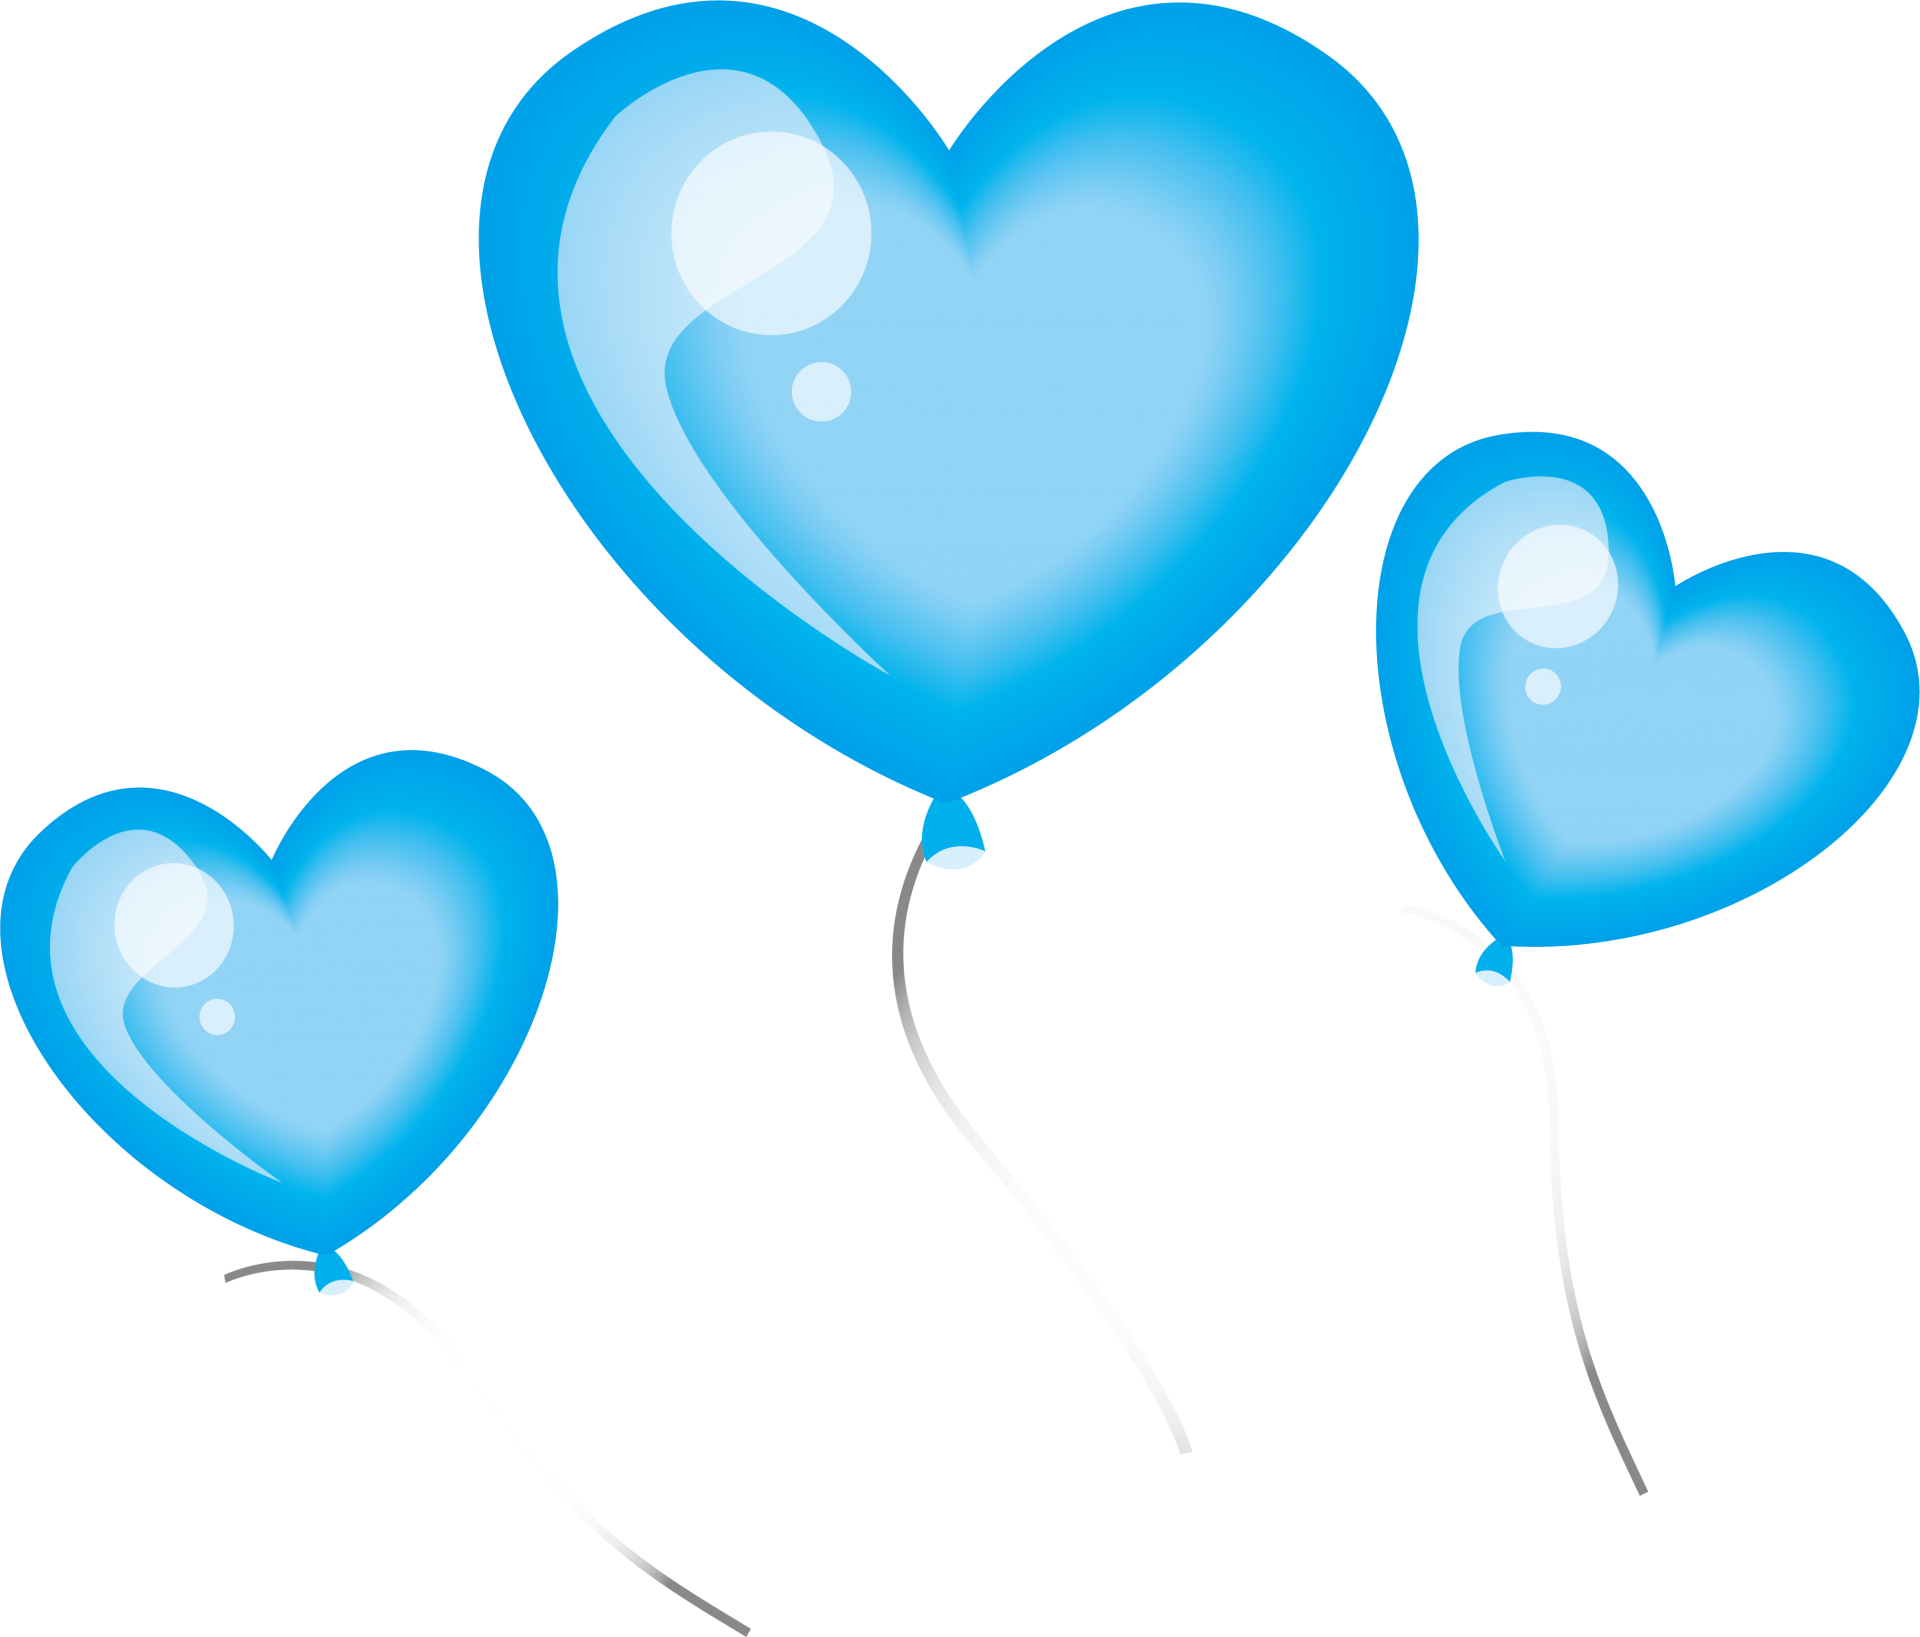 Heart Shaped Balloons - Blue